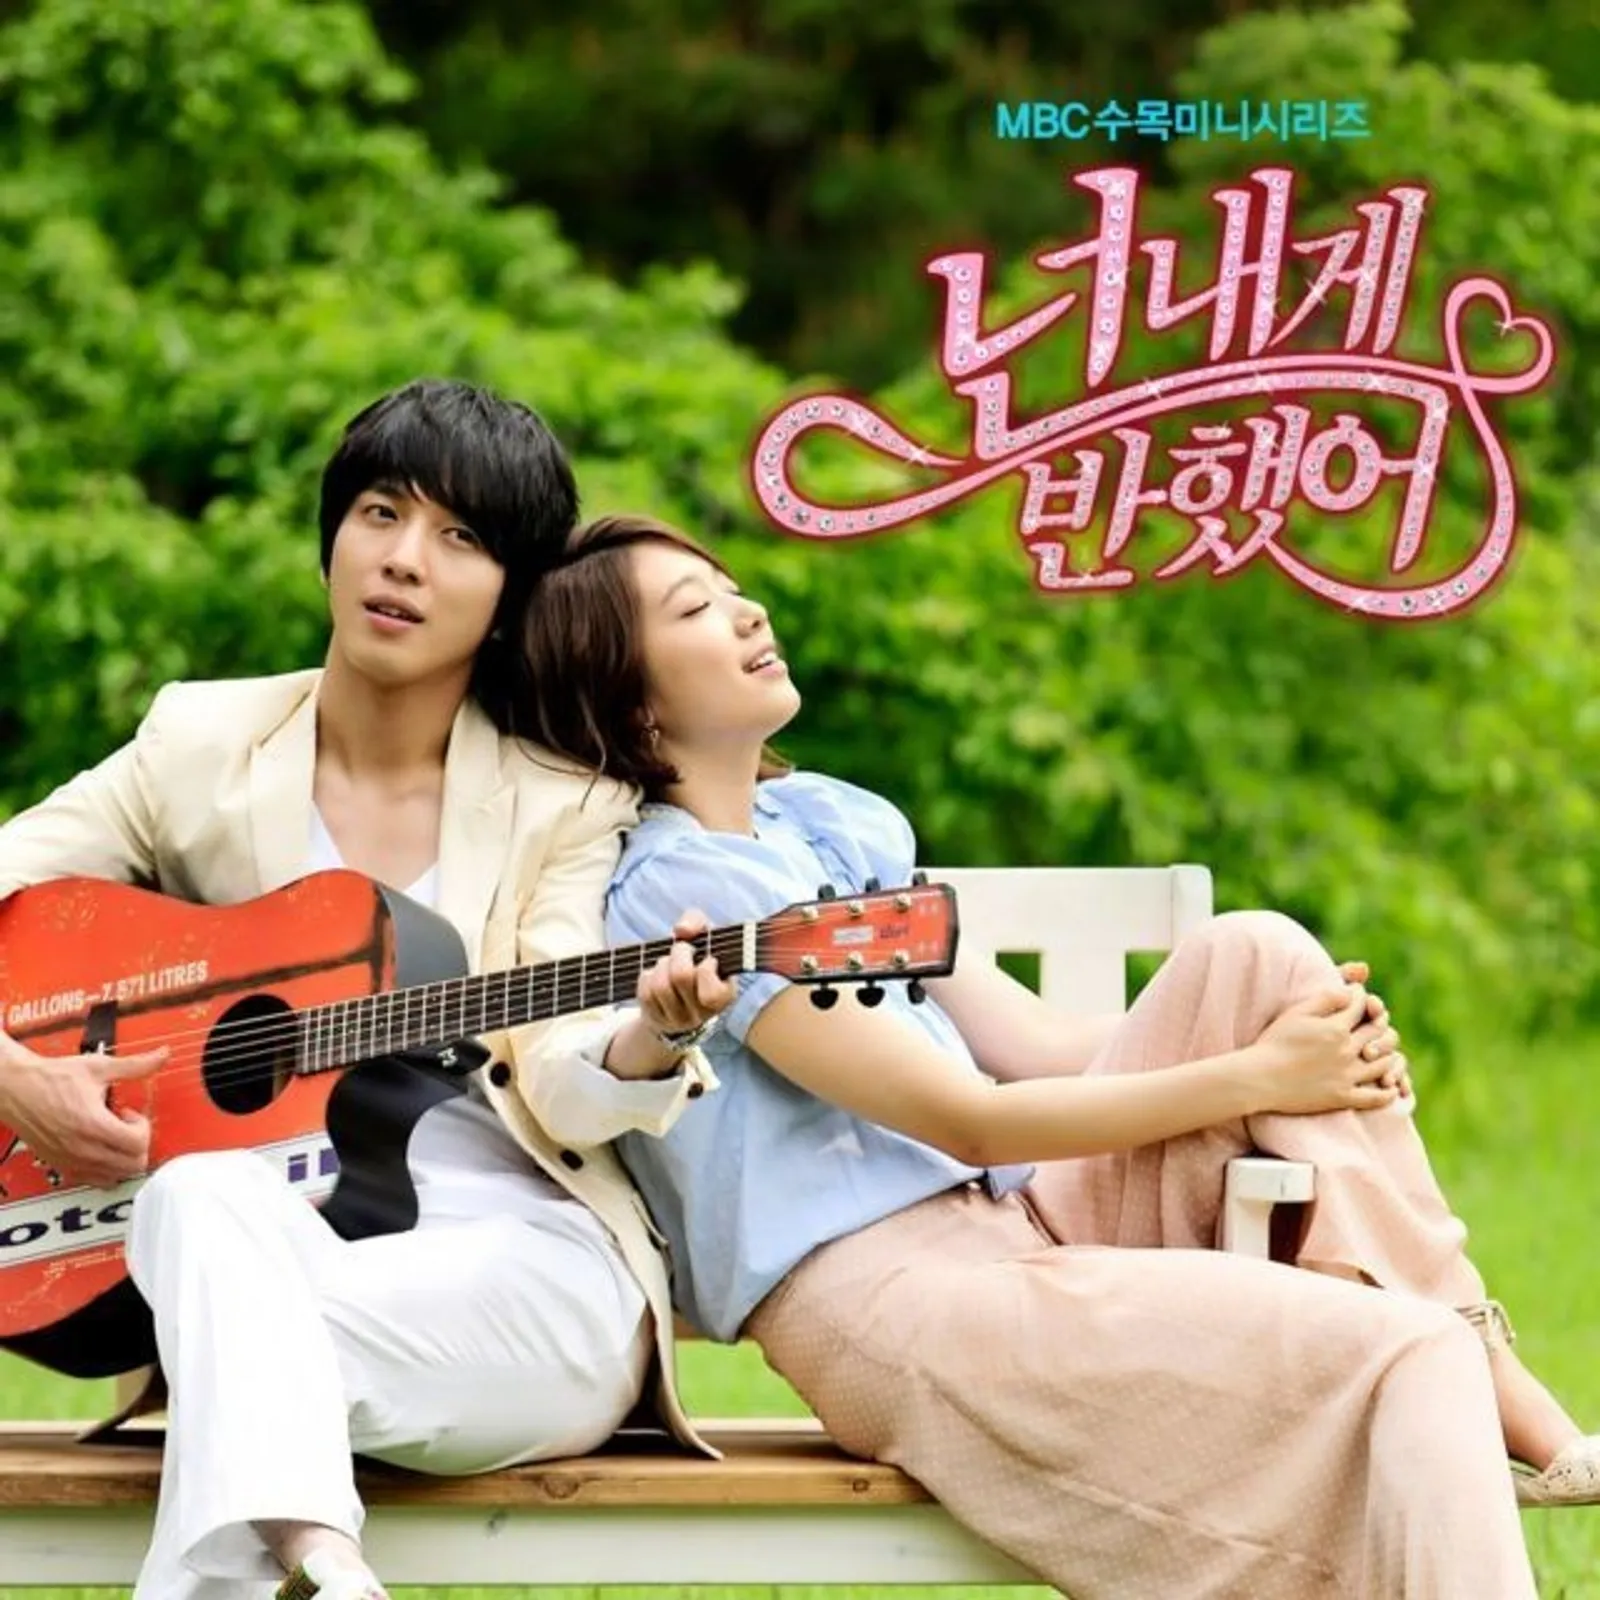 Panen Rating Tinggi, Ini 5 Drama yang Dibintangi Park Shin Hye